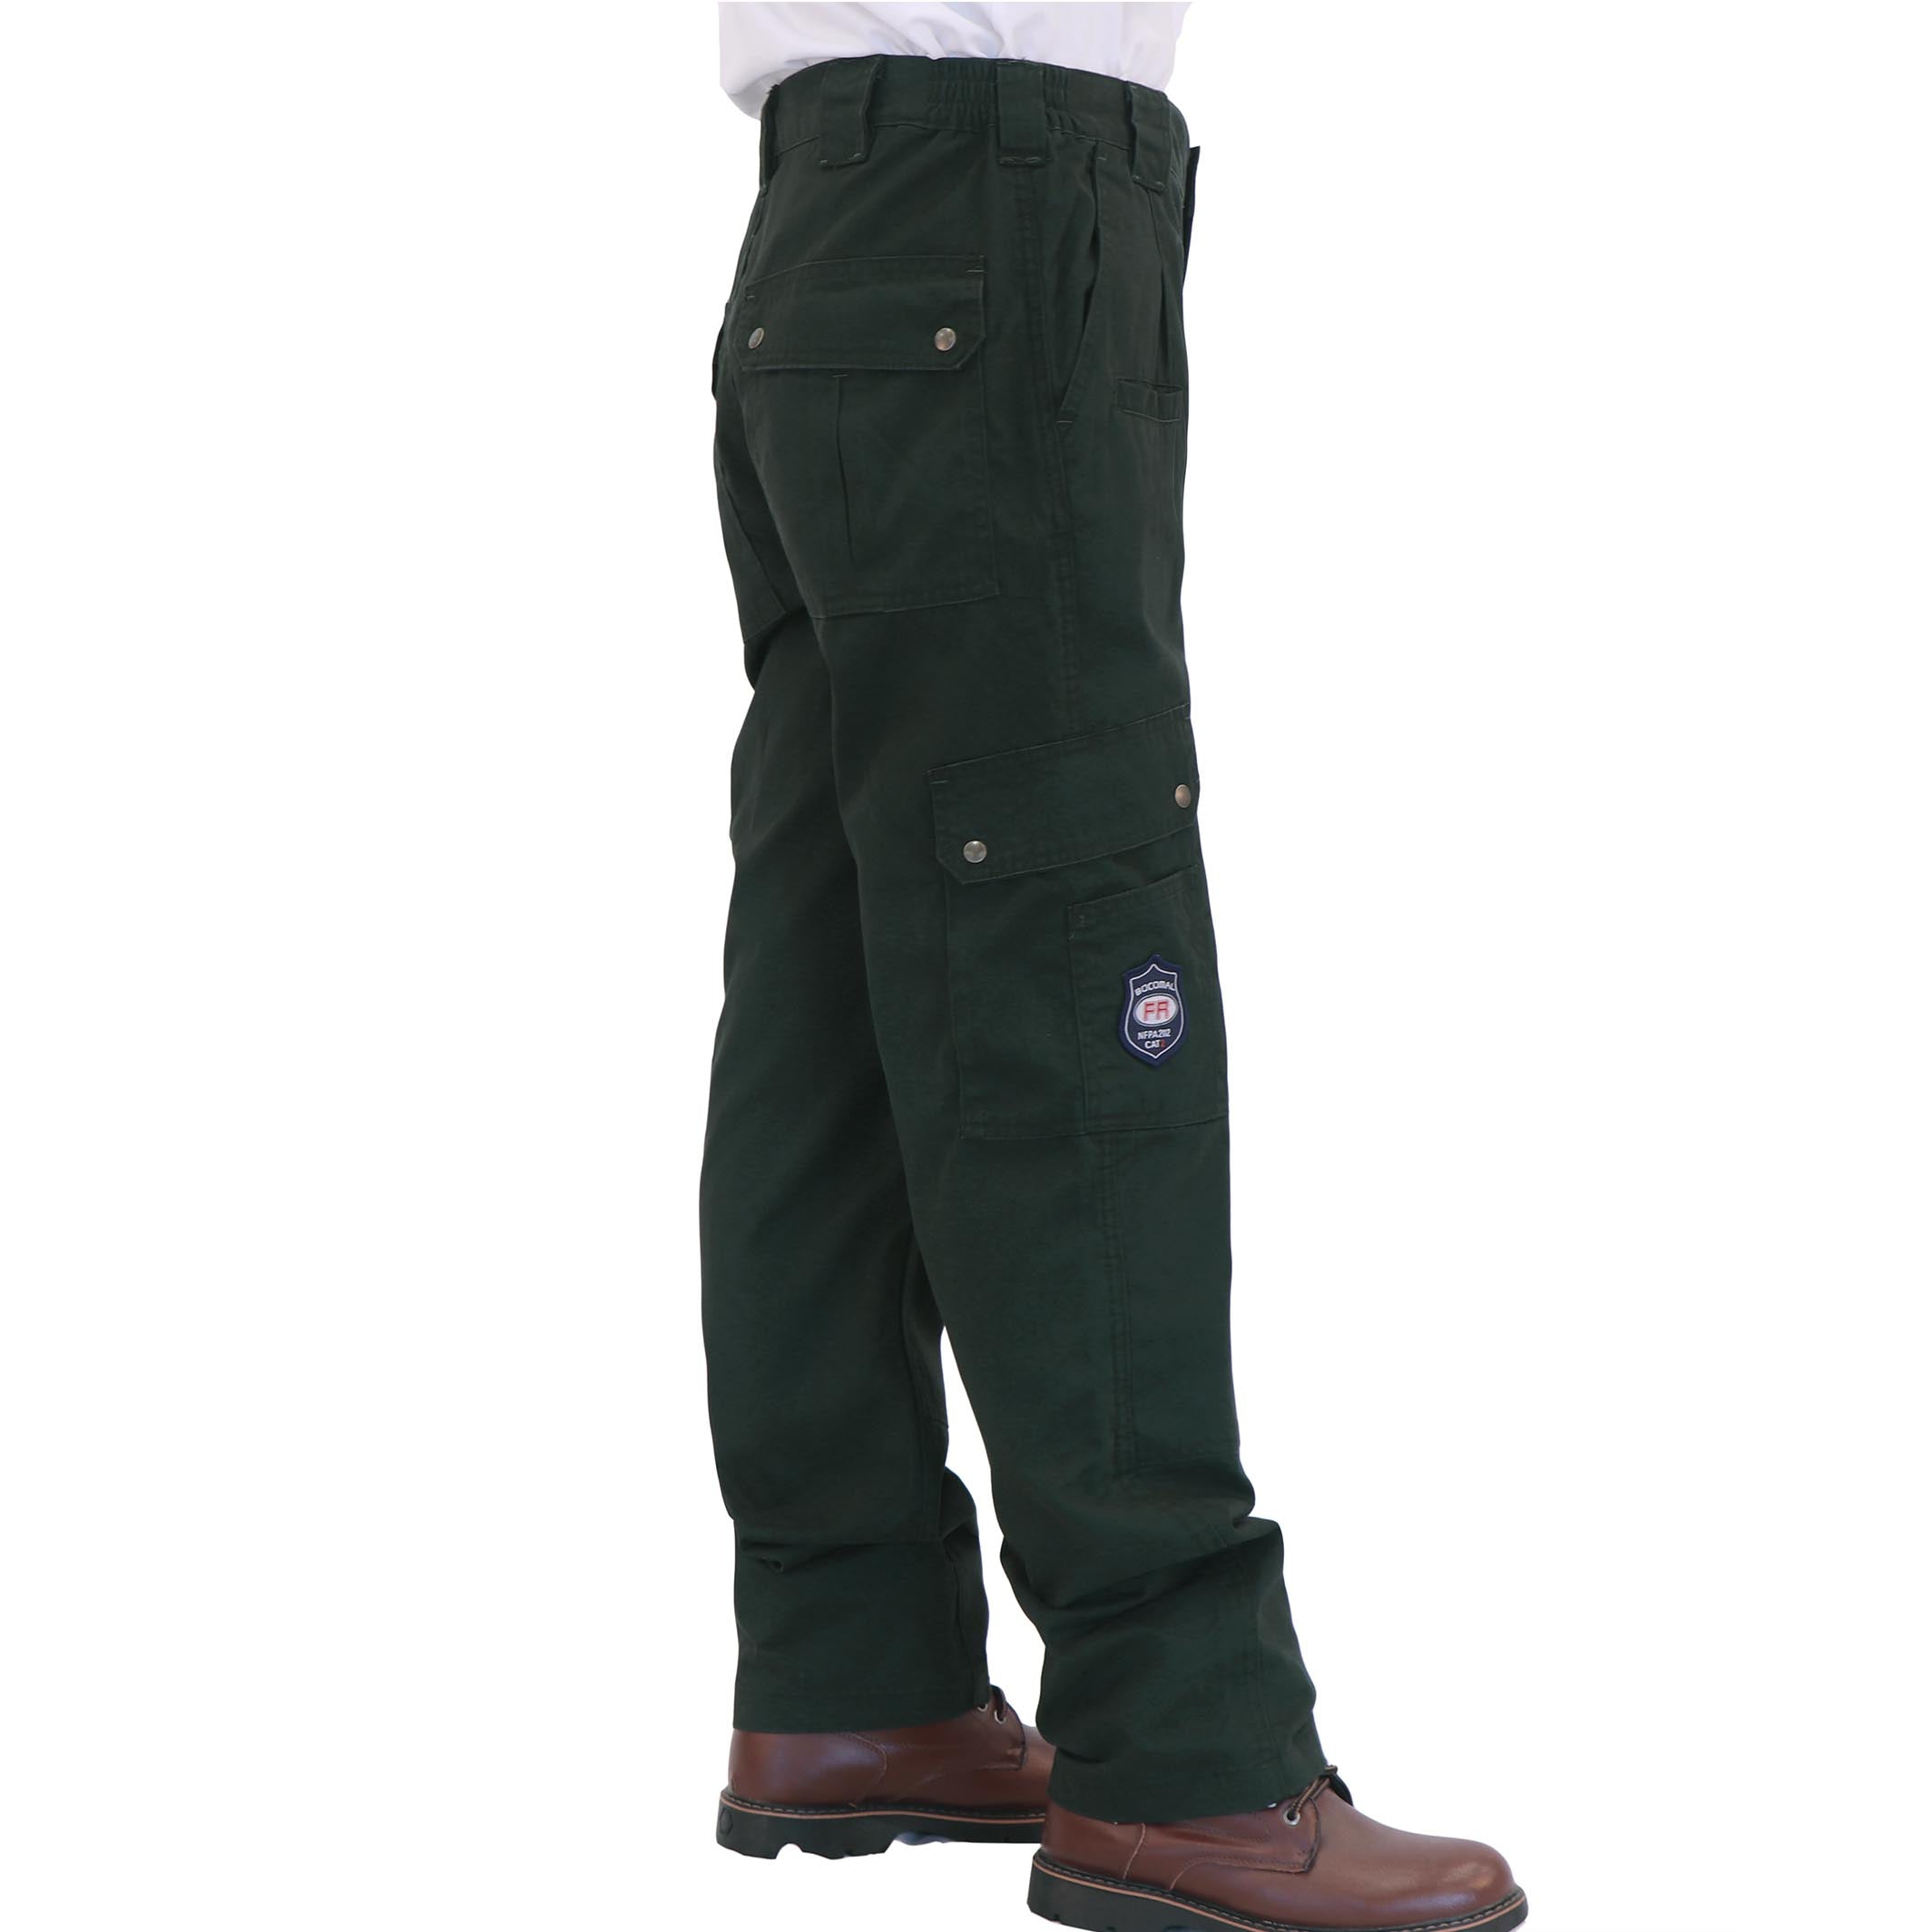  BOCOMAL Men's FR Cargo Pants Flame Resistant Pants